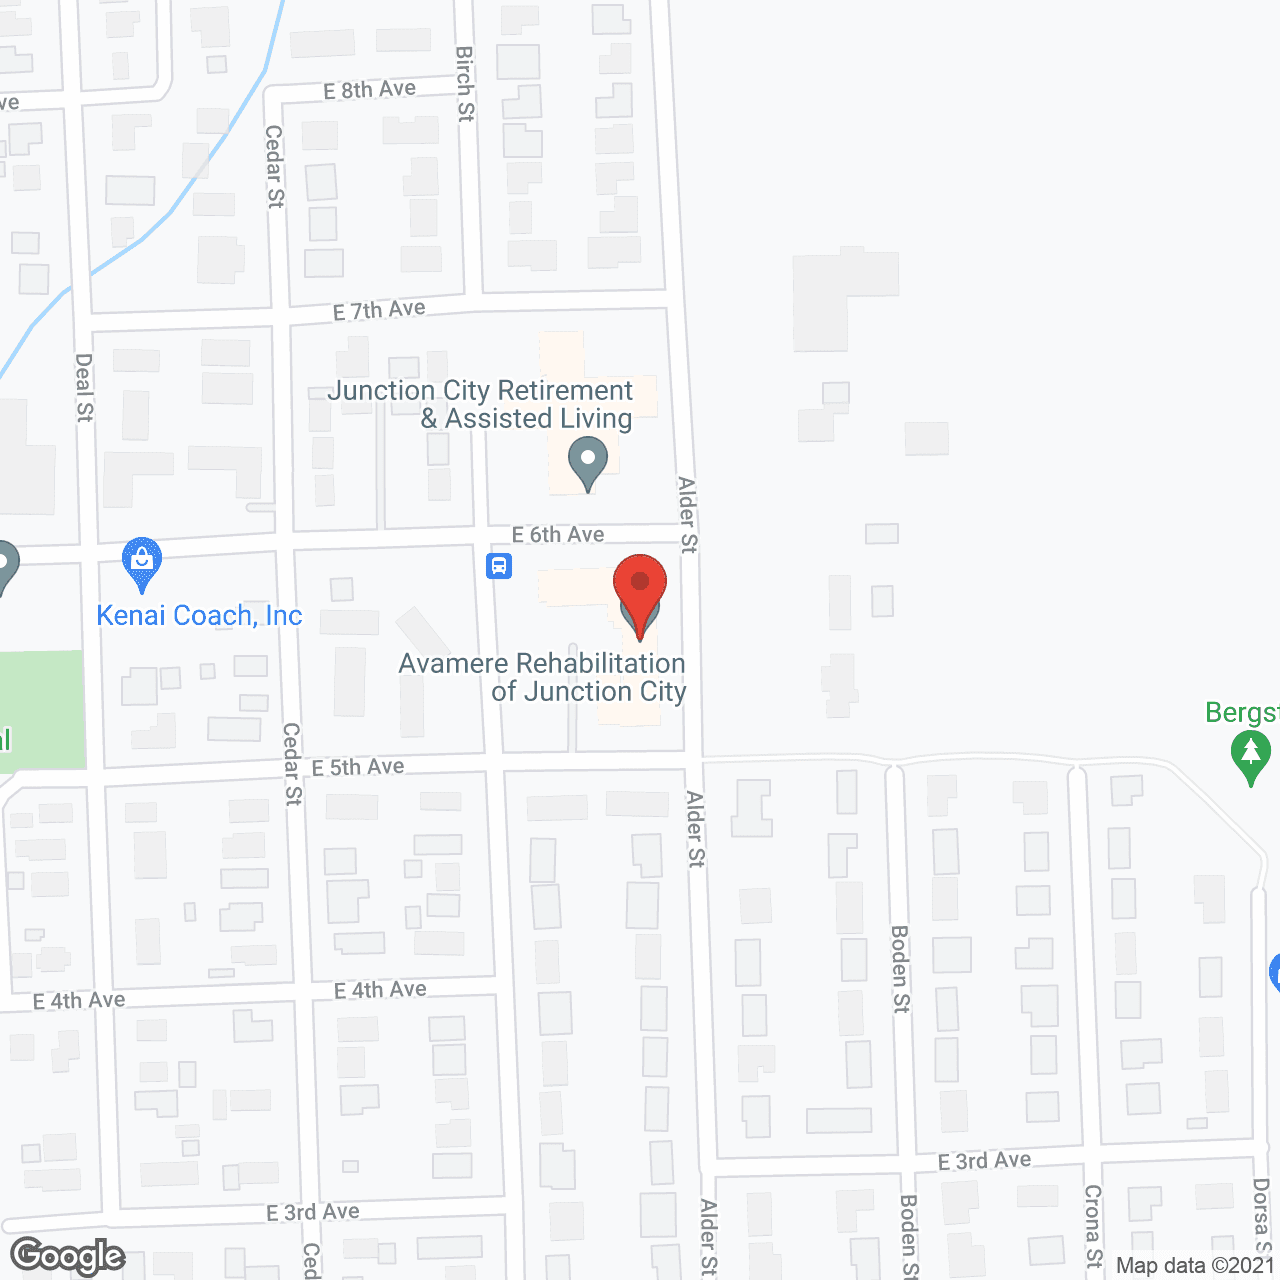 Avamere Rehabilitation of Junction City in google map